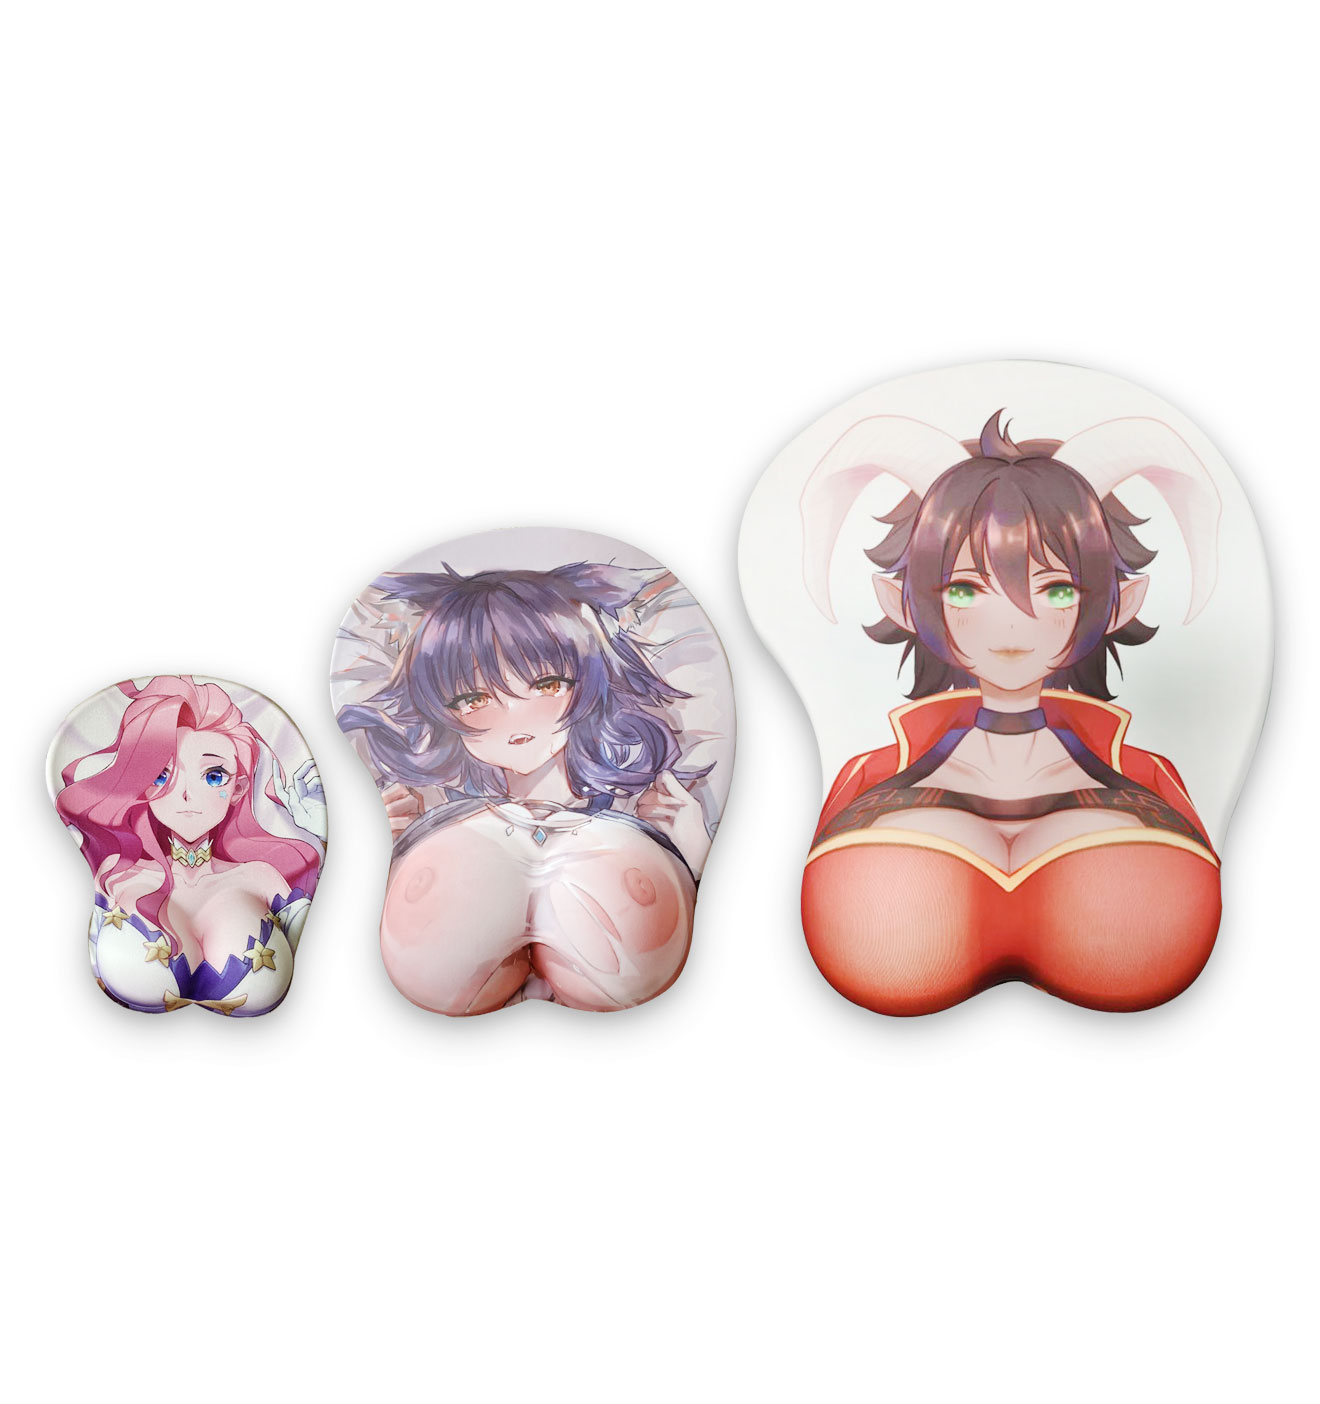 bikini girl life size oppai mousepad 6751 - Anime Mousepads